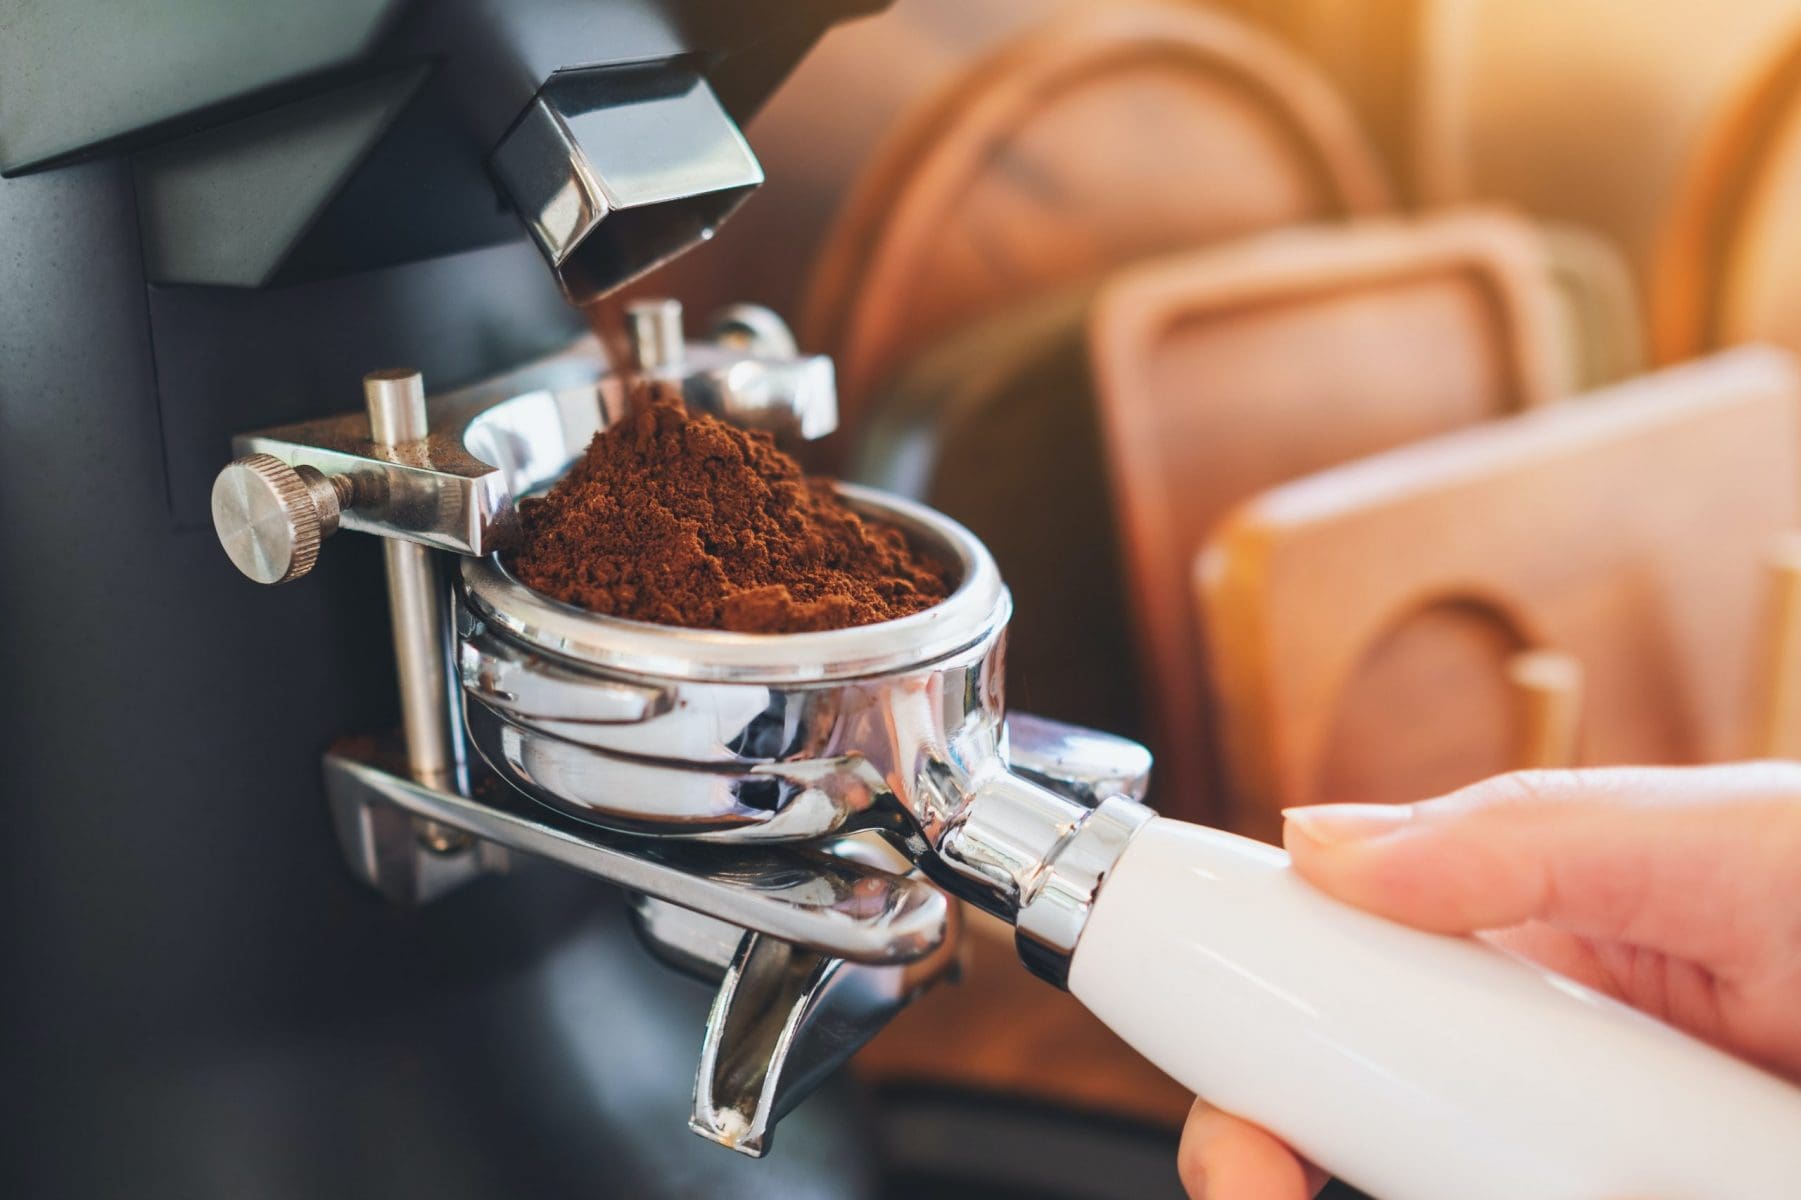 Lease a Professional Coffee Machine